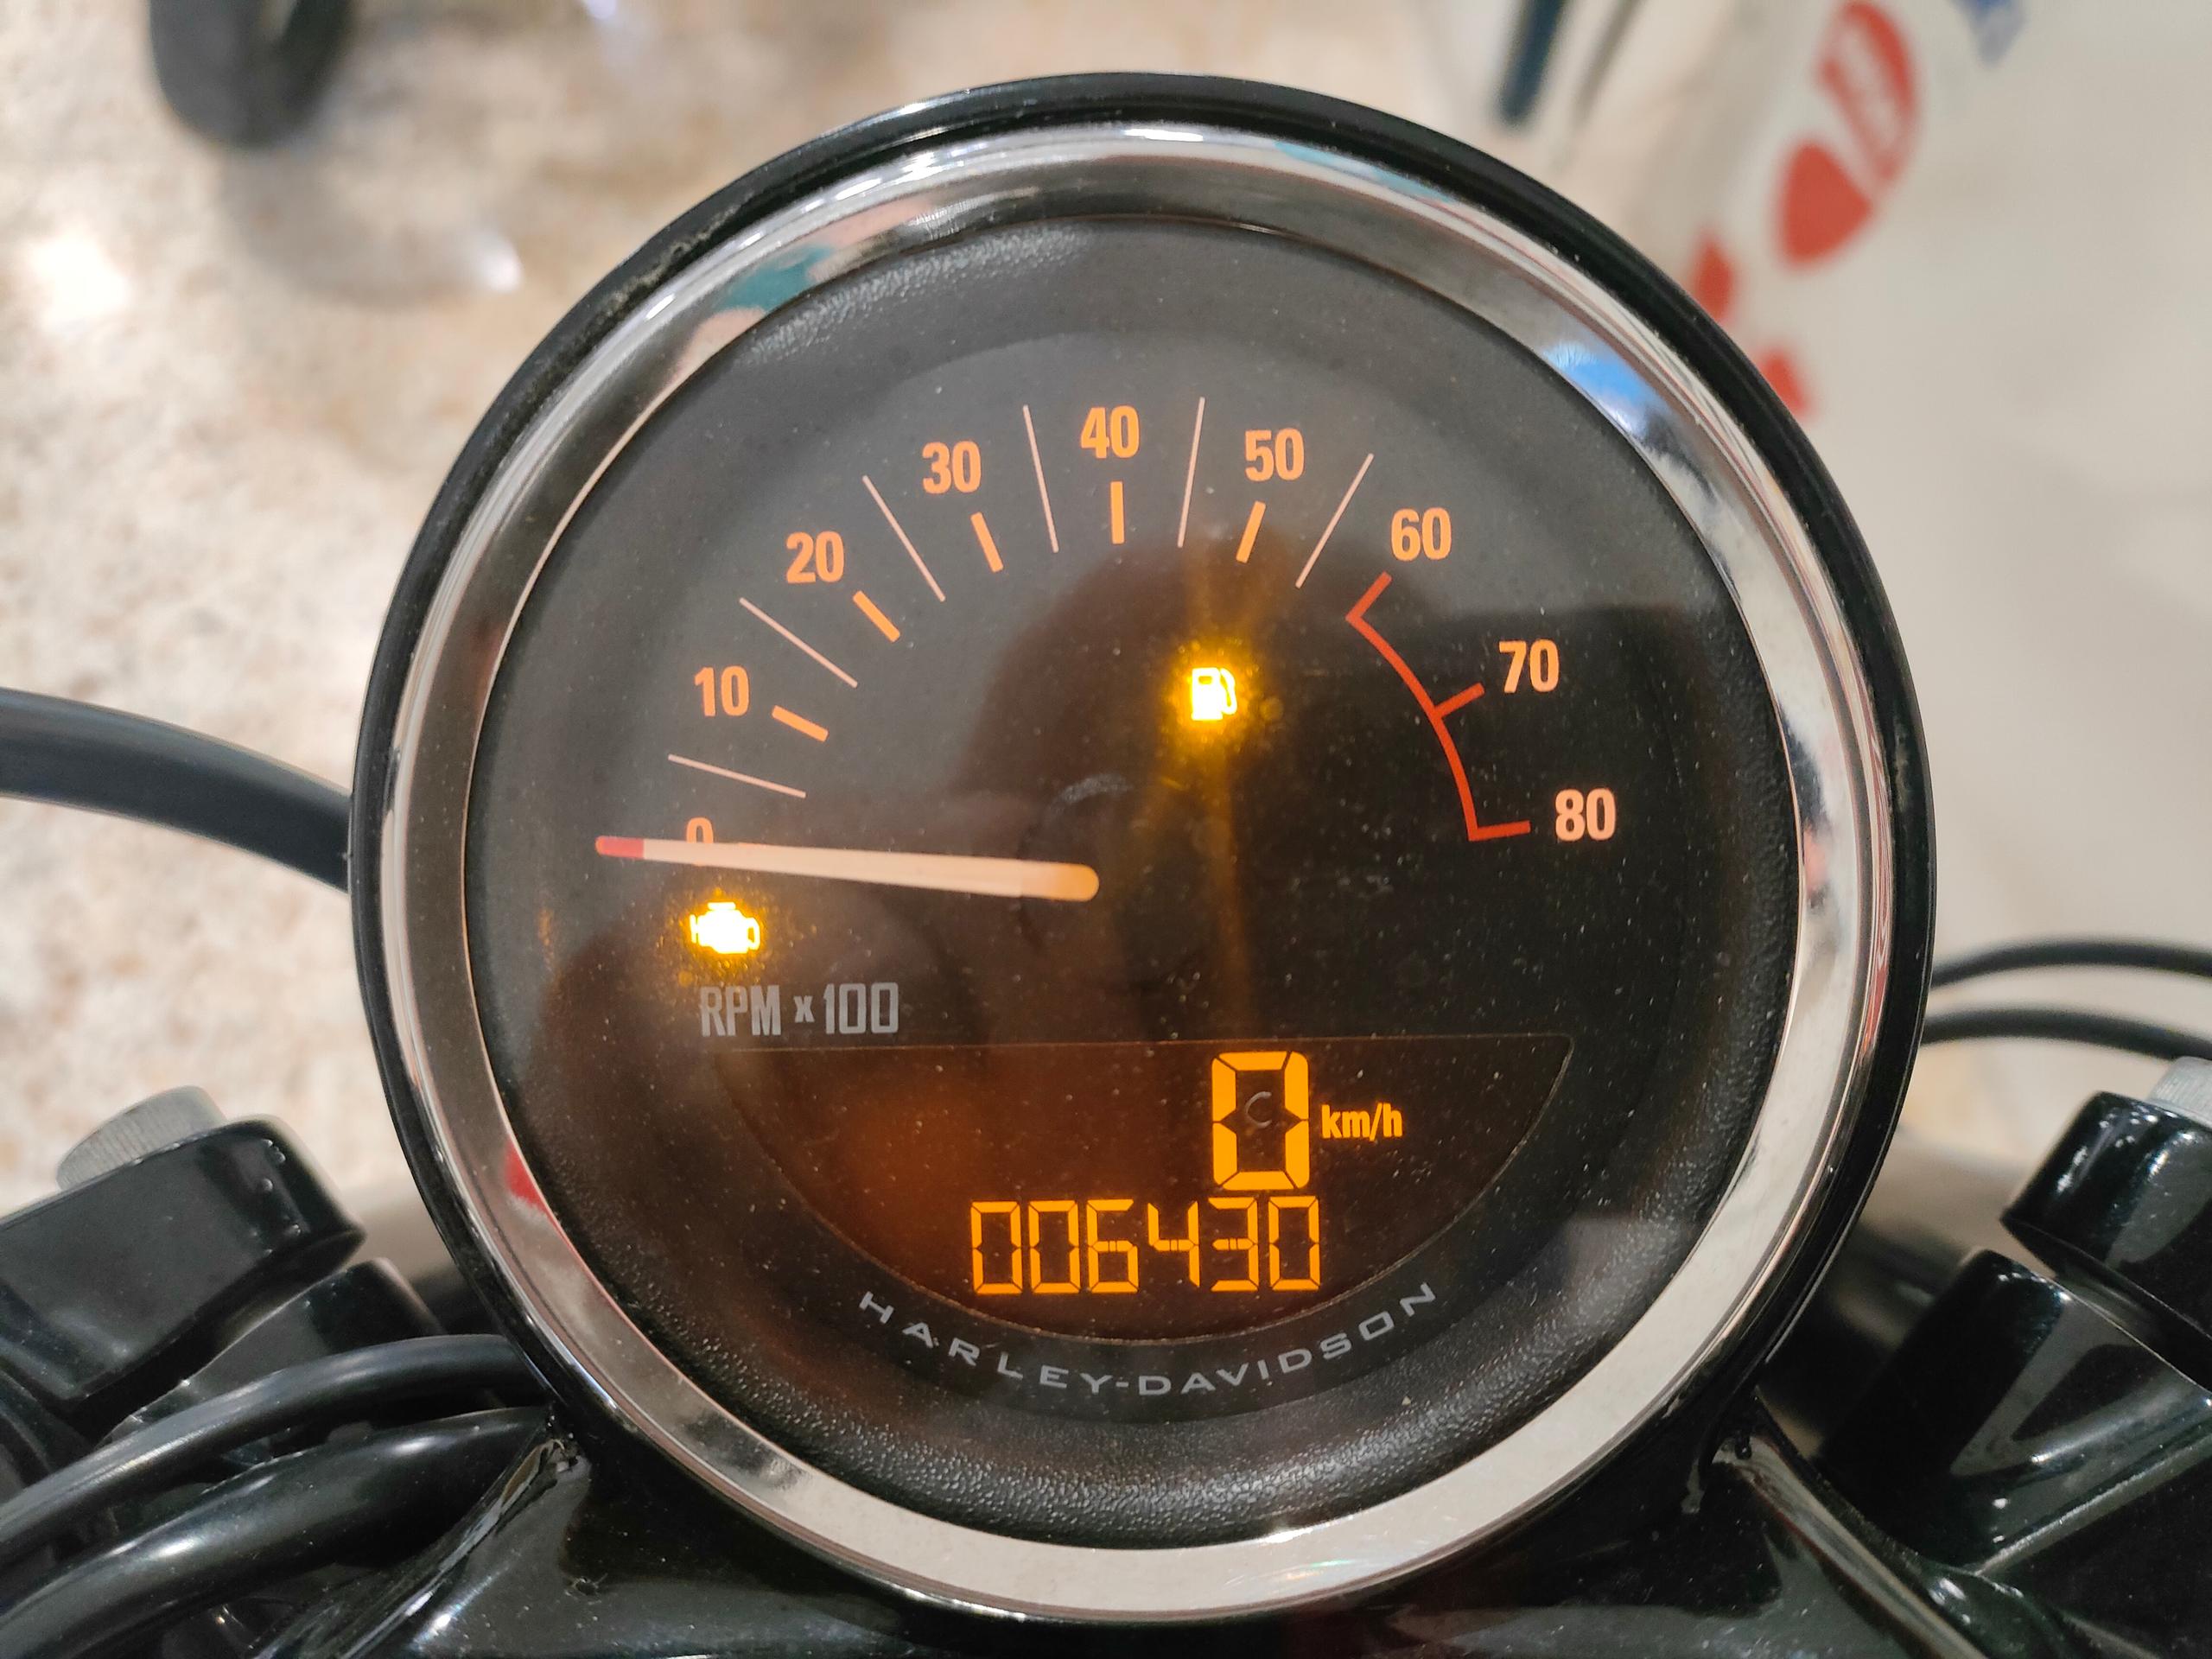 Harley  XL1200 Roadster 2020 Km6430